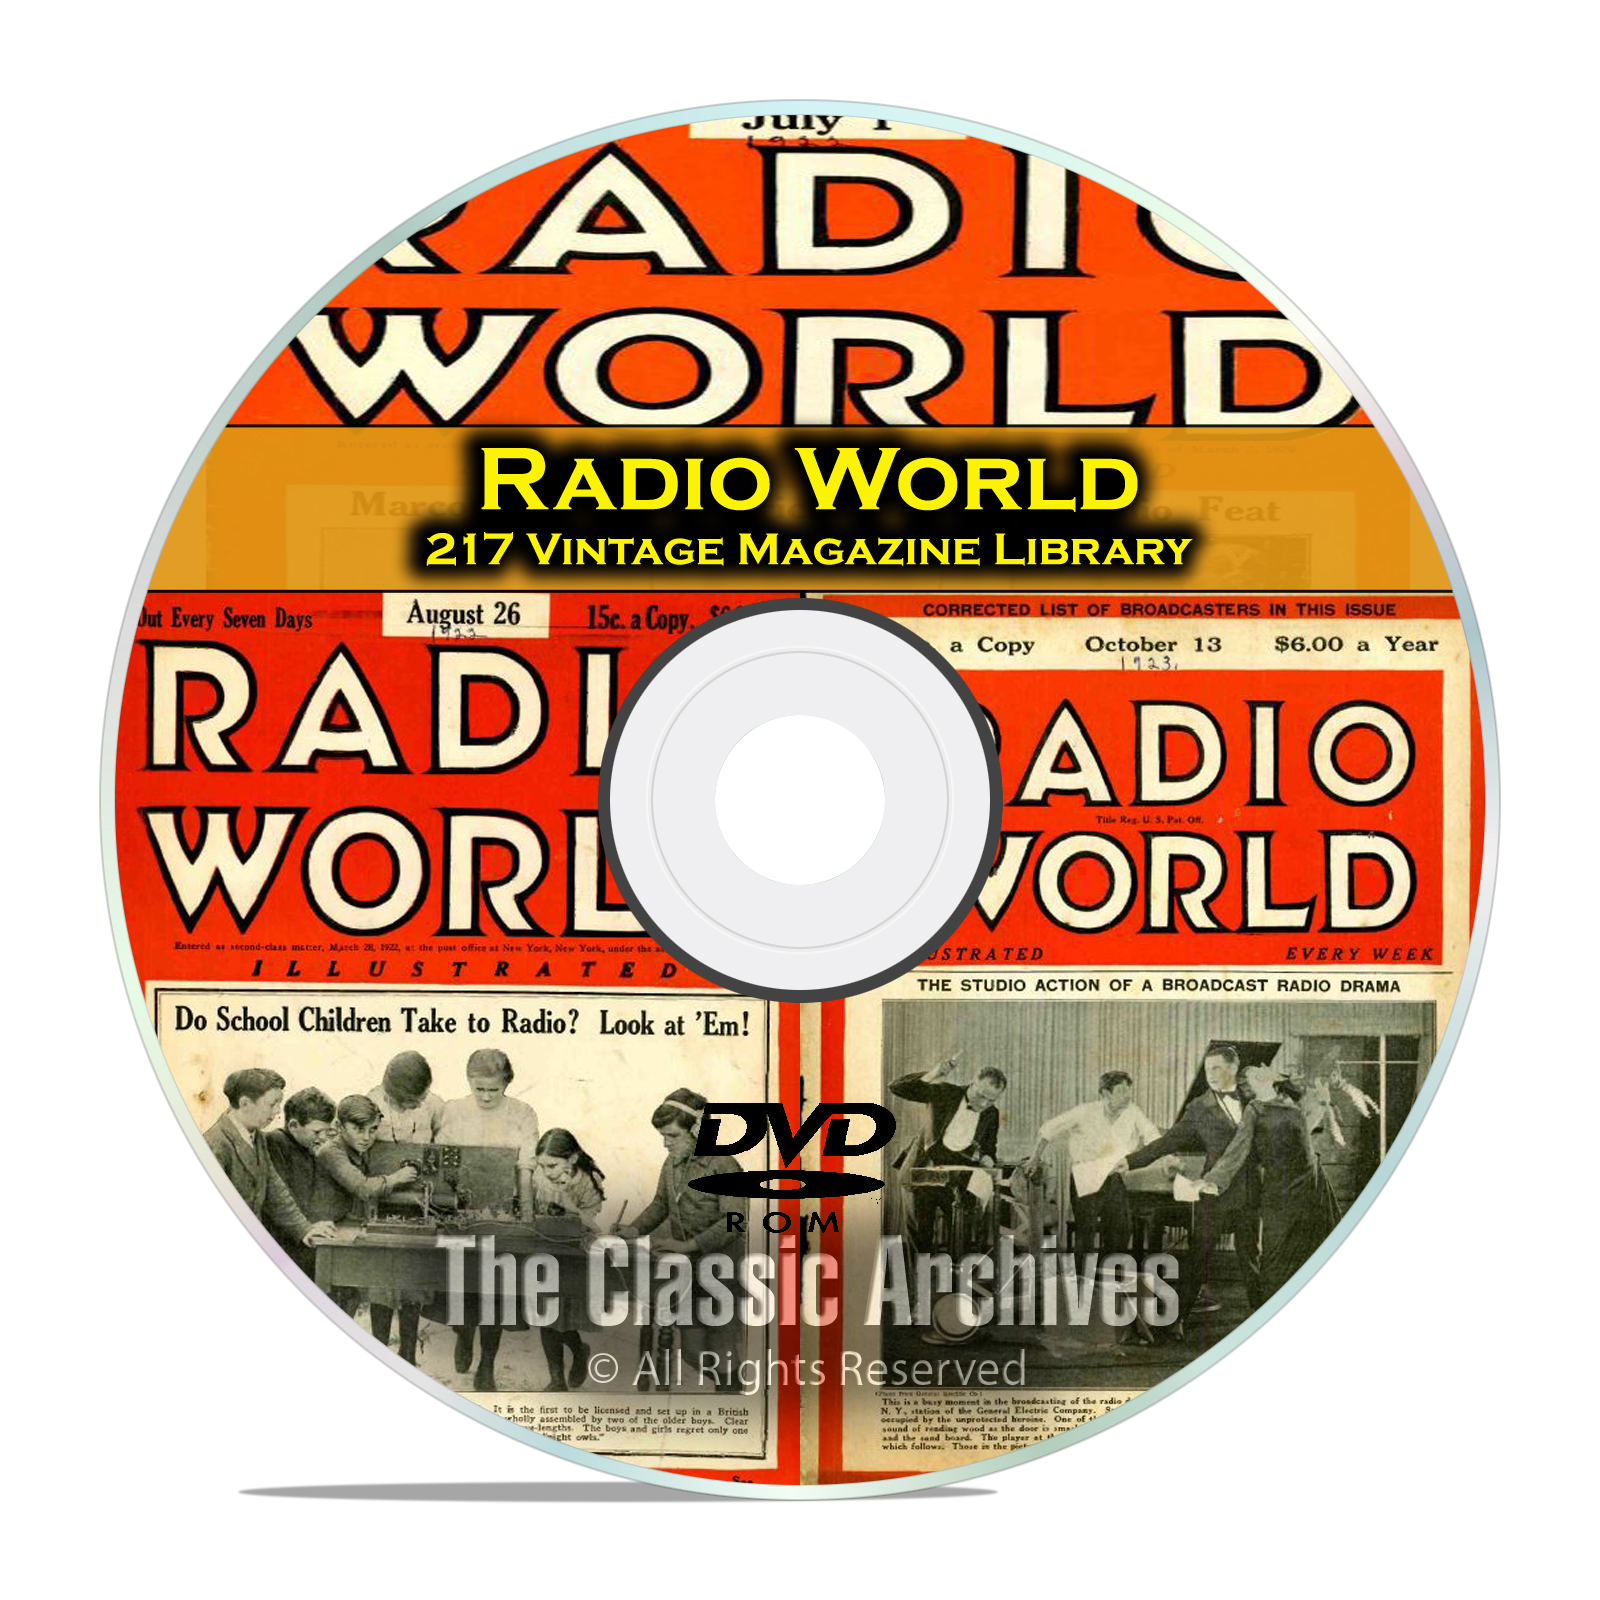 Radio World, 217 Vintage Old Time Radio Magazine Collection in PDF on DVD